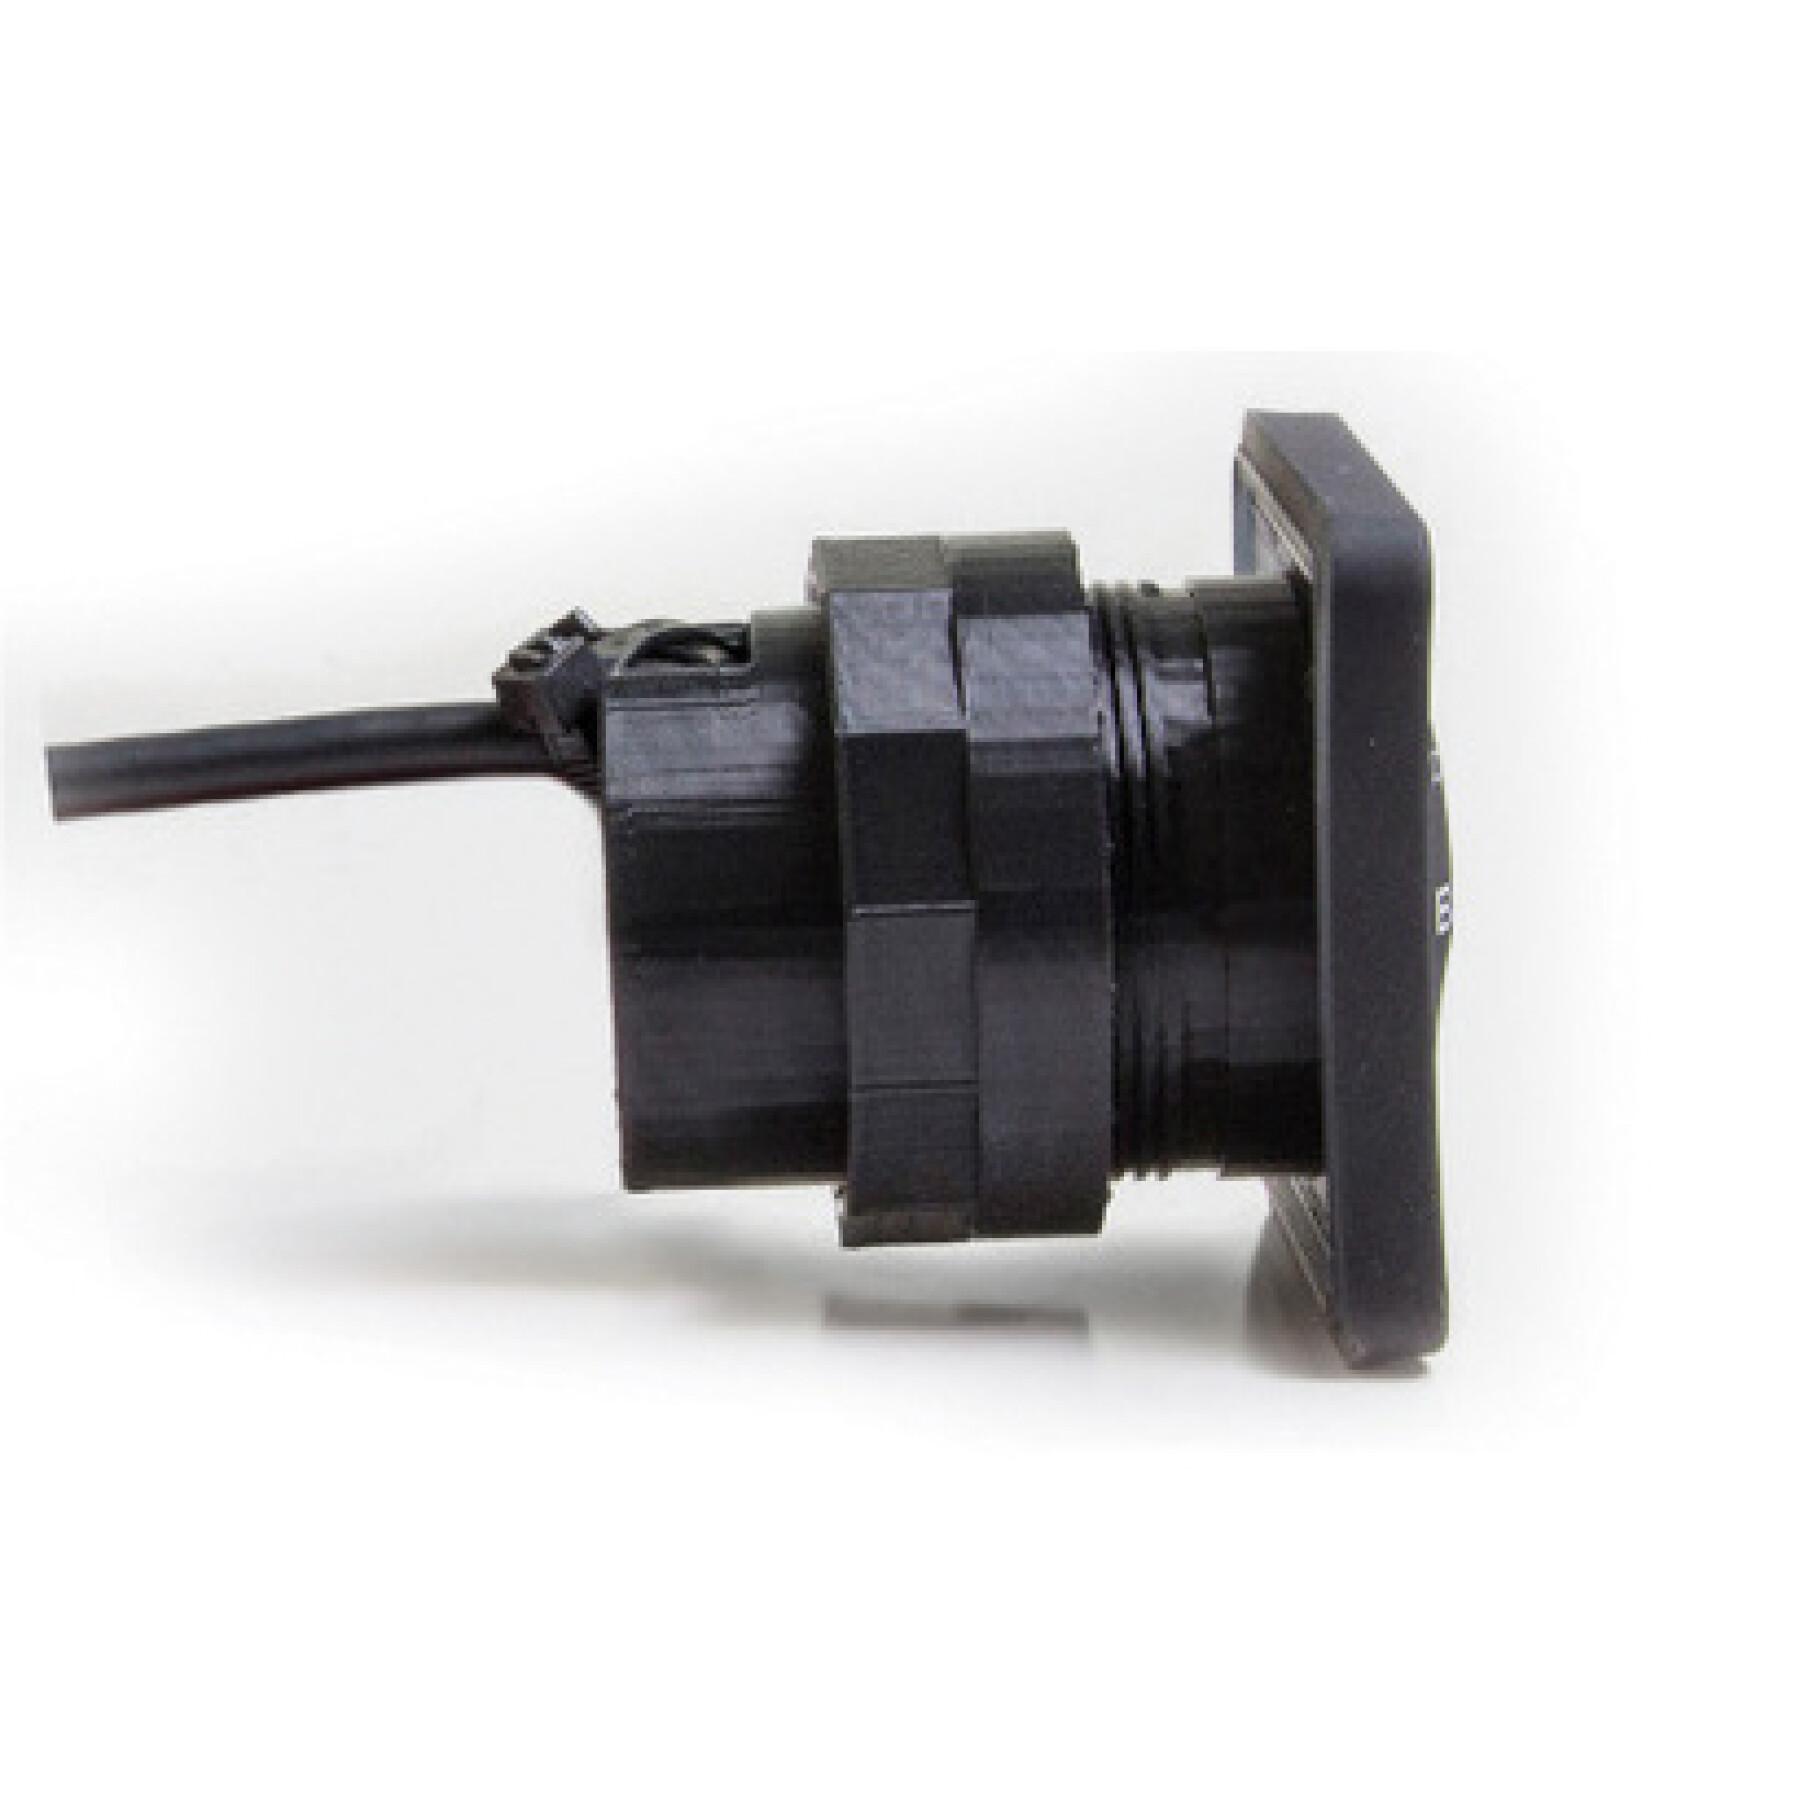 Interruptor doble impermeable v2 con LED Lenco Marine Inc. 15270-001